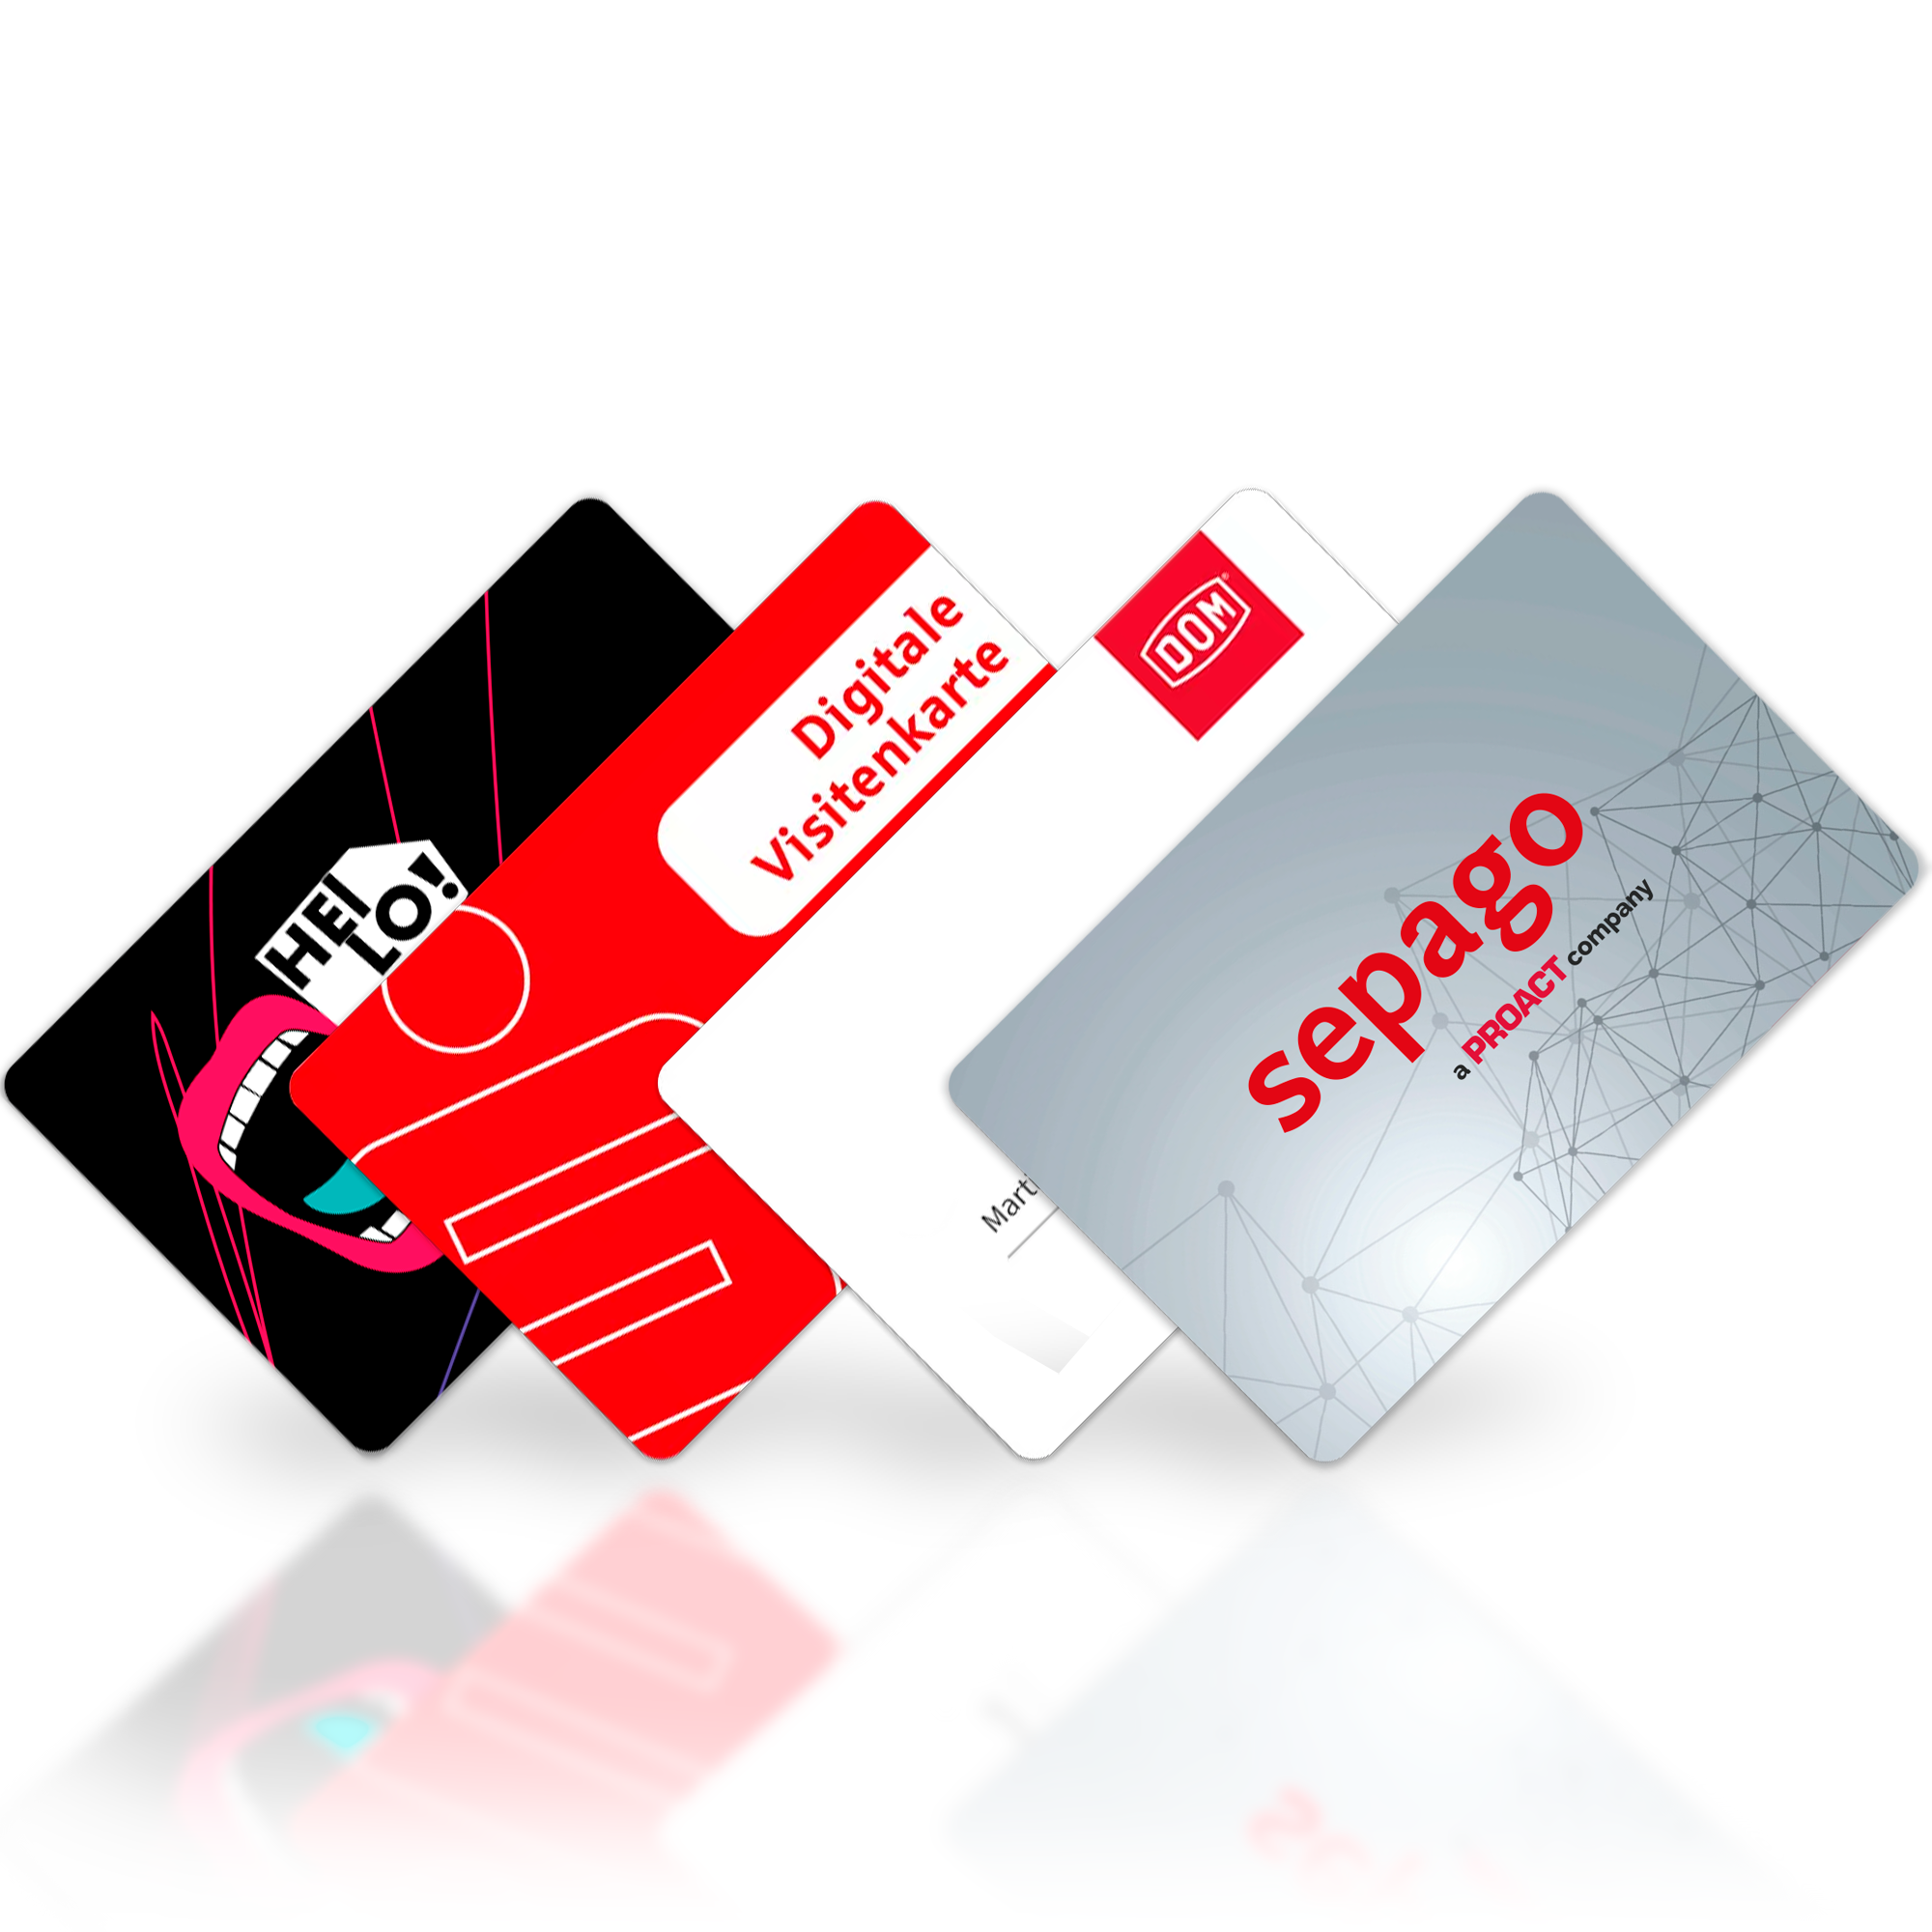 personalisierbare Phonecard - Digitale Visitenkarte NFC